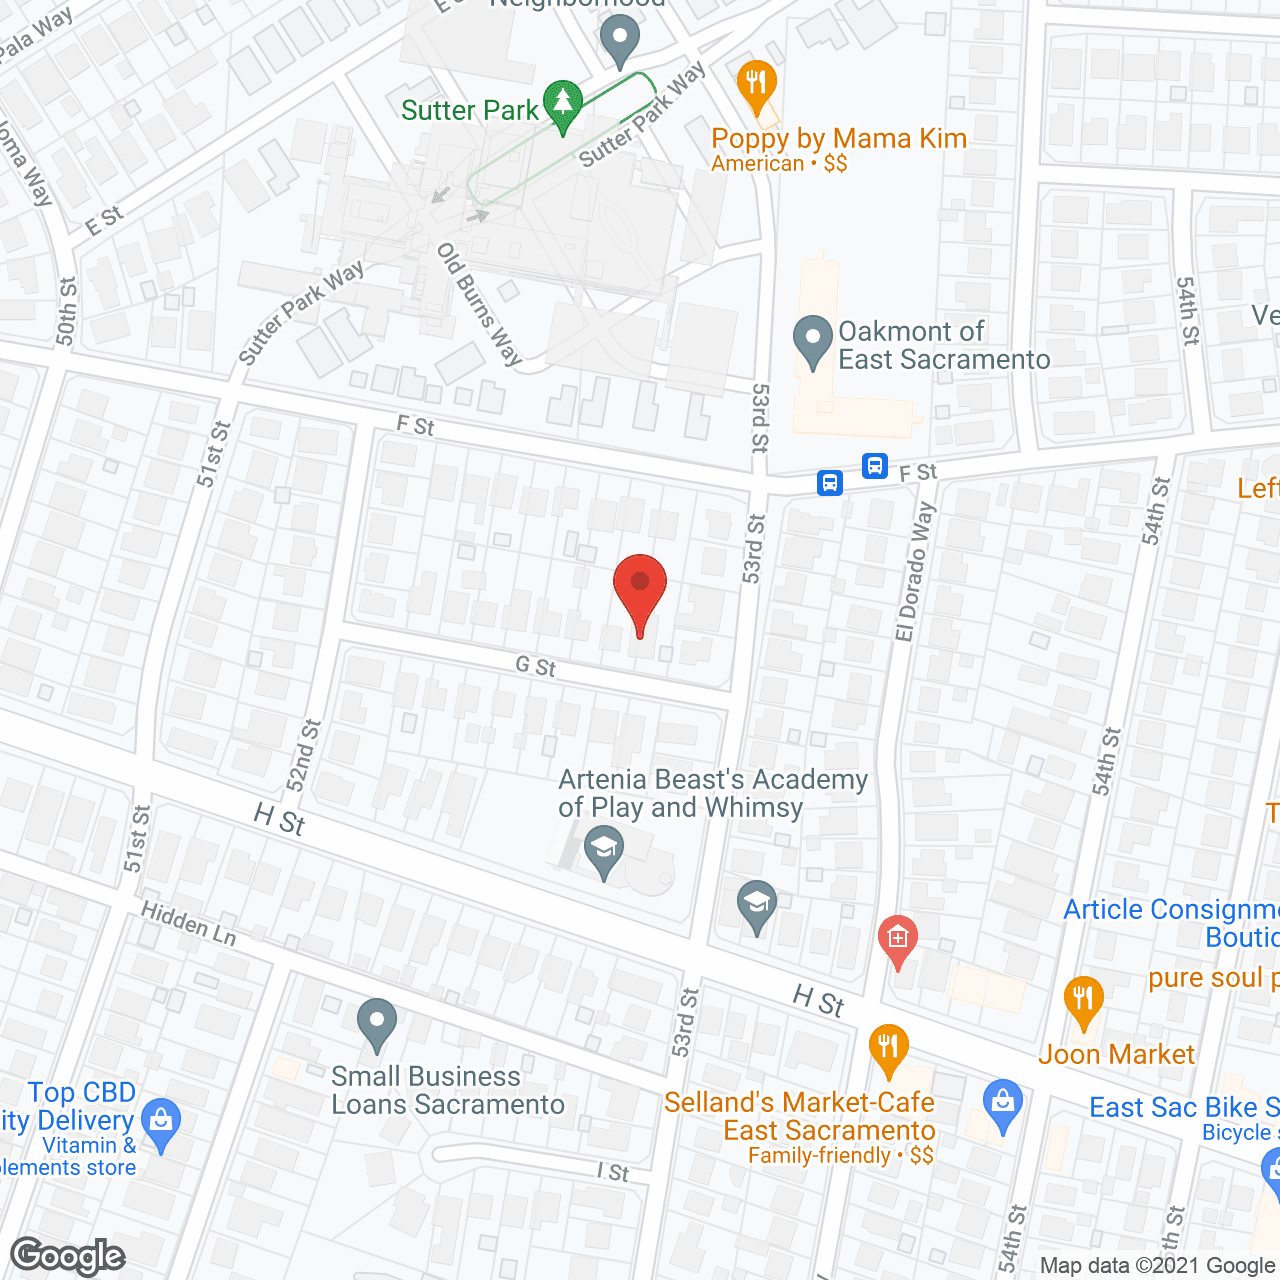 Oakmont of East Sacramento in google map